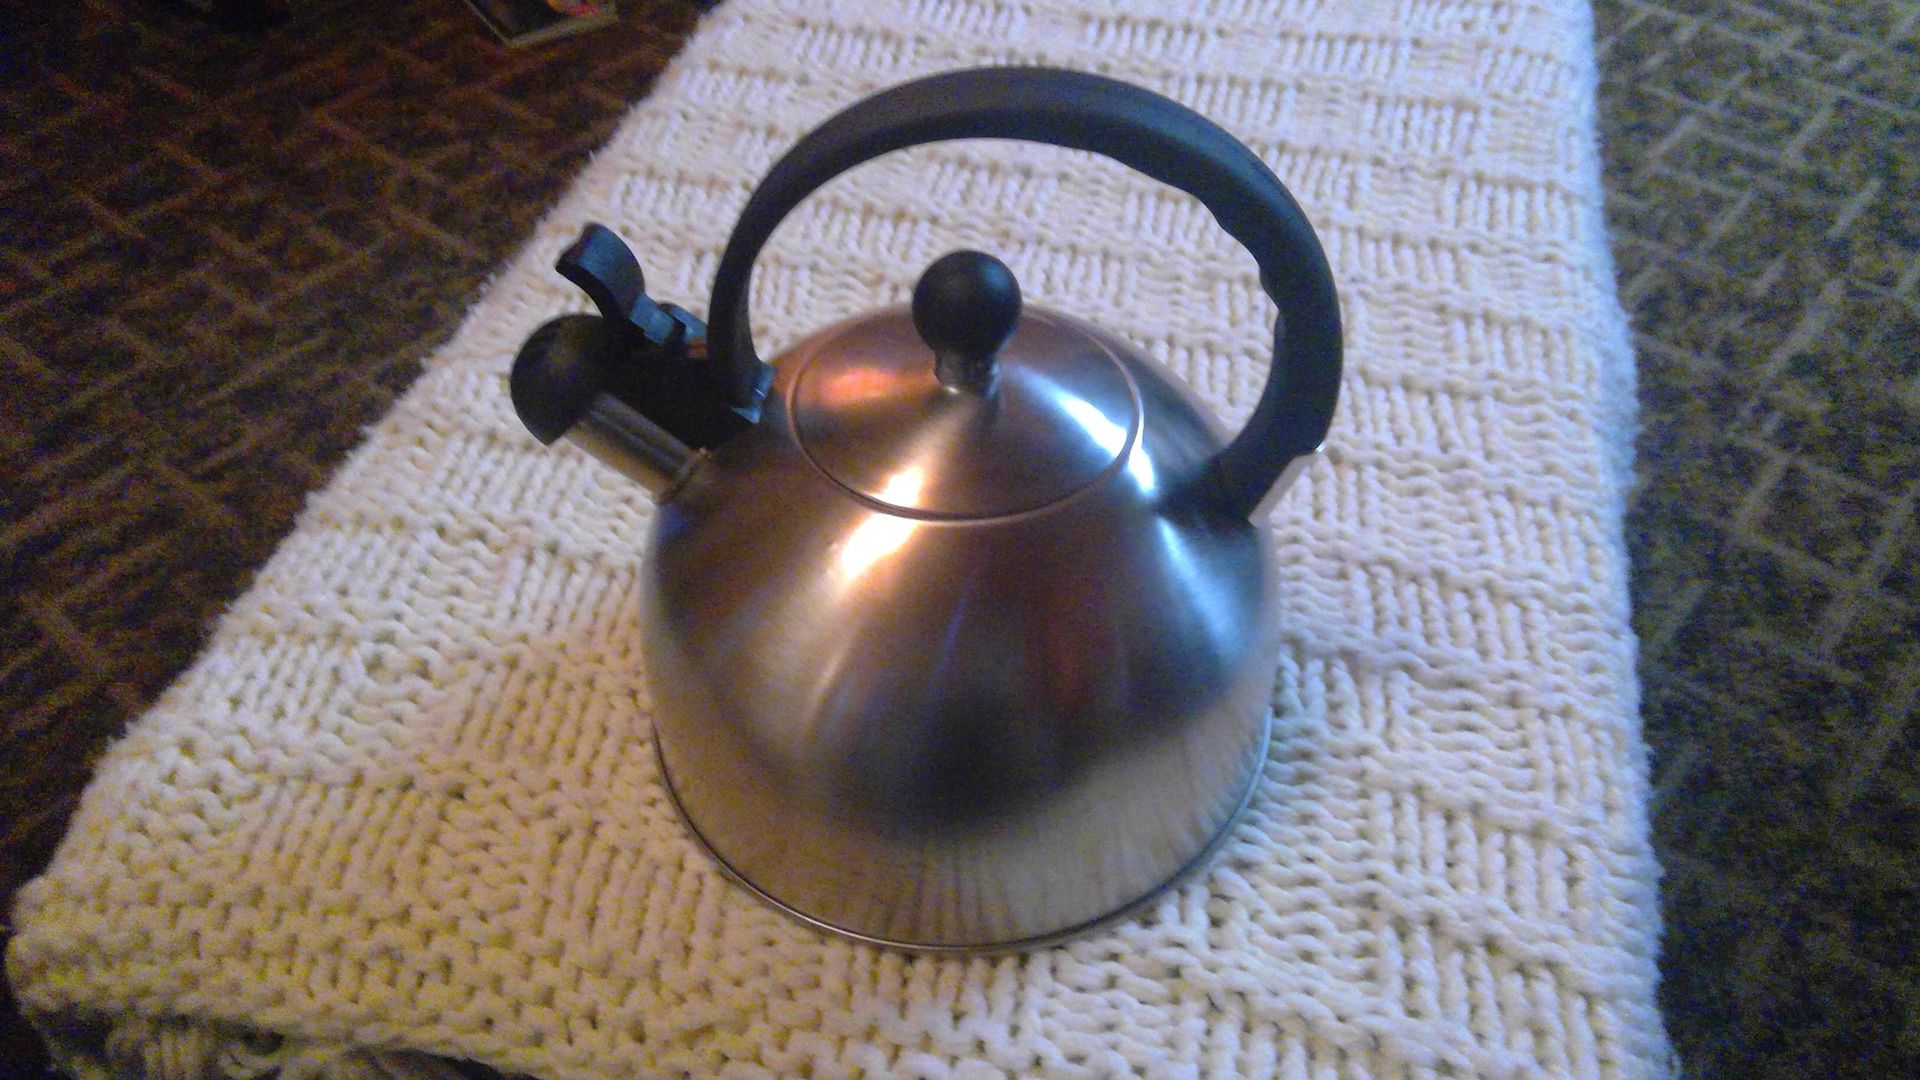 Copco Tucker Brushed Stainless Steel Tea Kettle, 1.5-Quart